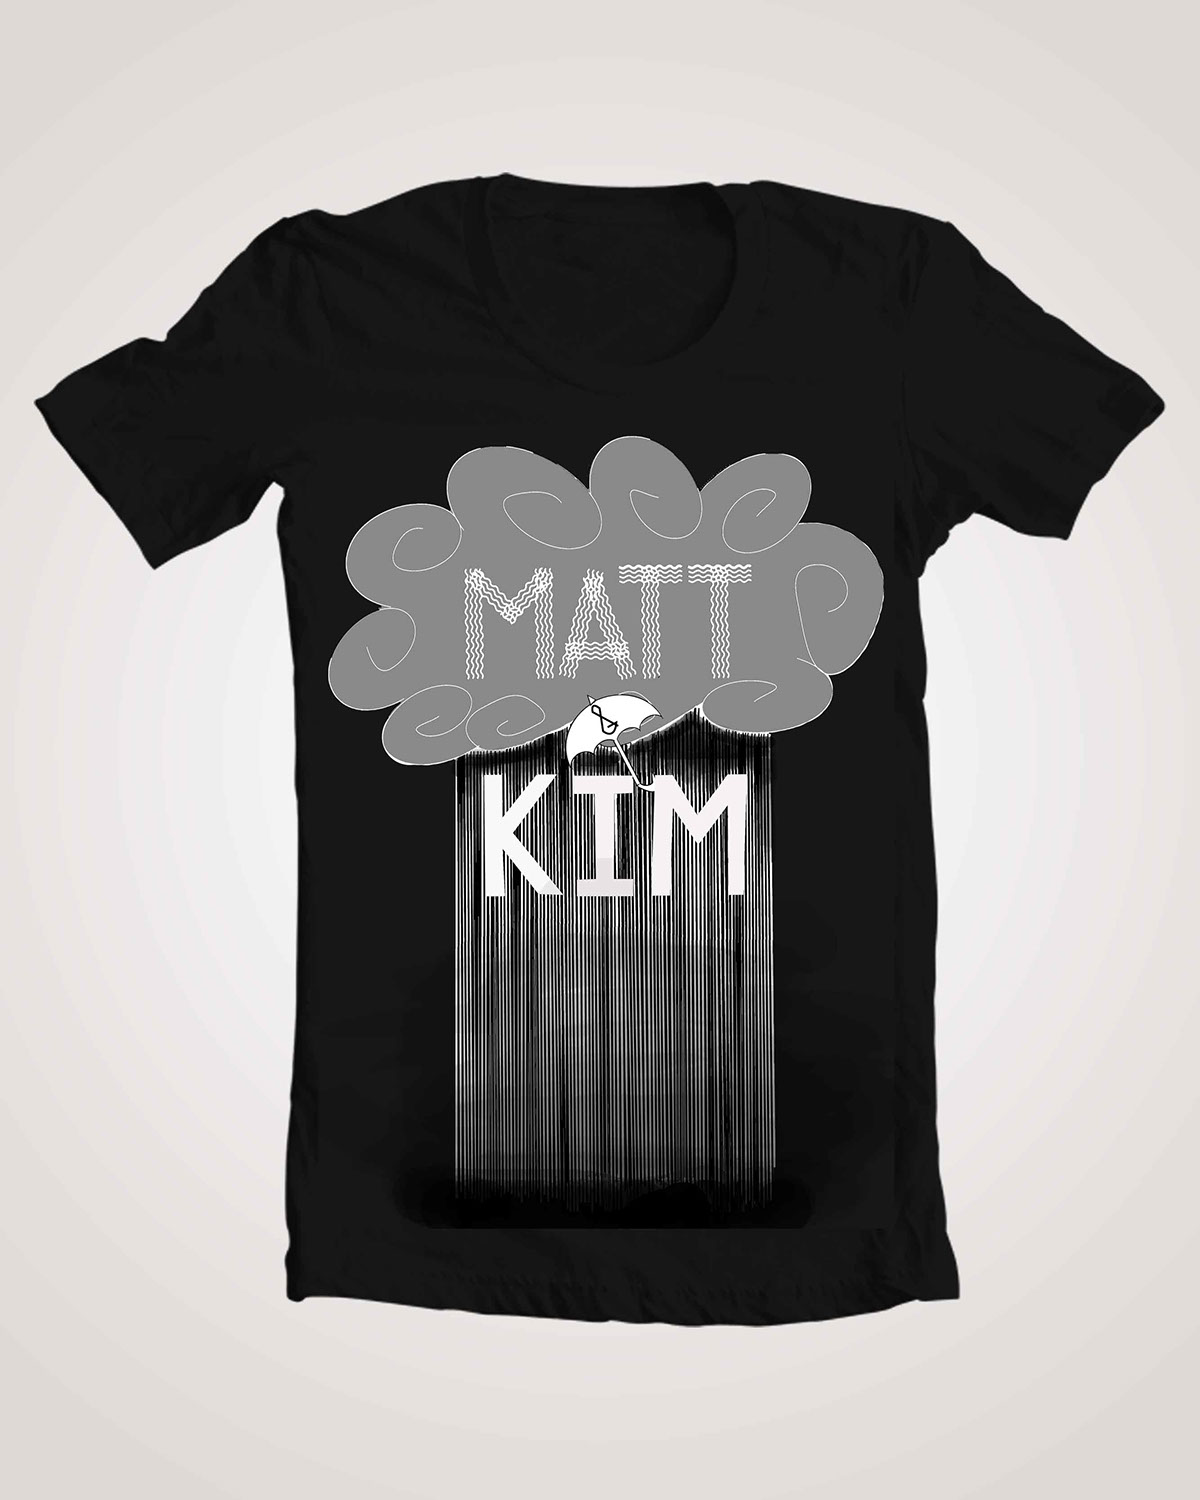 matt and kim contest t-shirts illustrated type design Layout